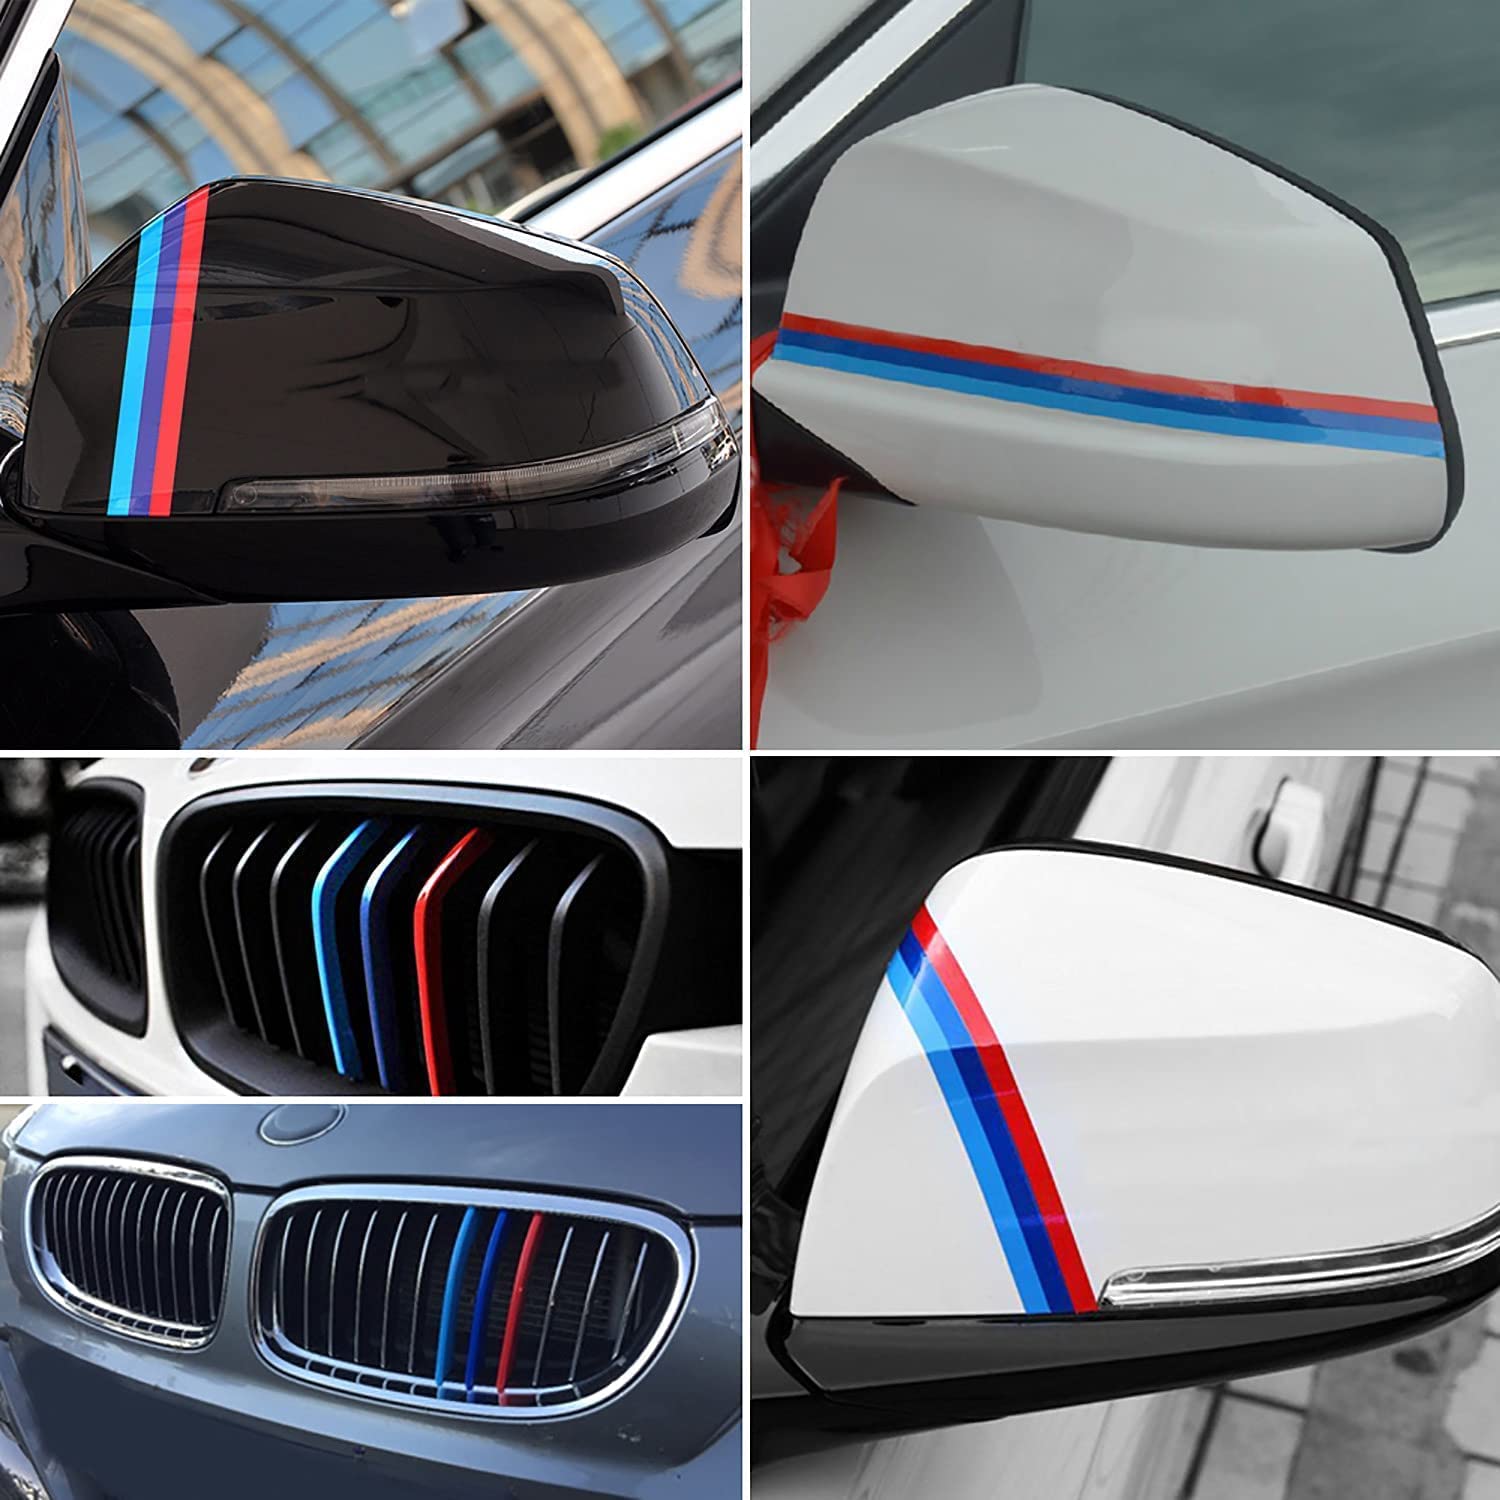 Adhesive sticker for the car mirror - Multi Color